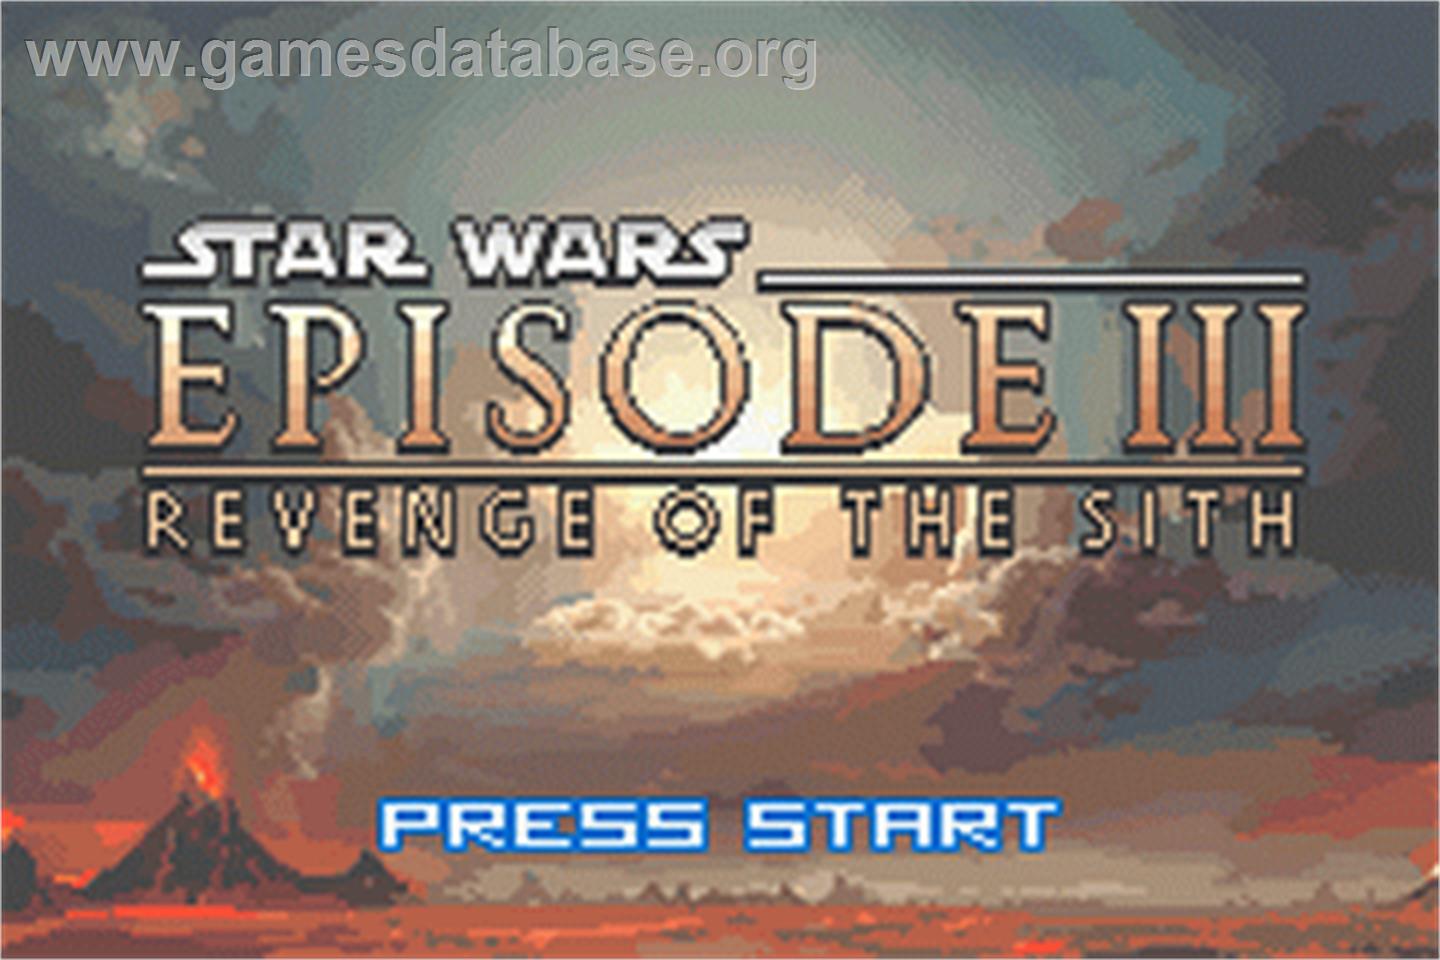 Star Wars: Episode III - Revenge of the Sith - Nintendo Game Boy Advance - Artwork - Title Screen